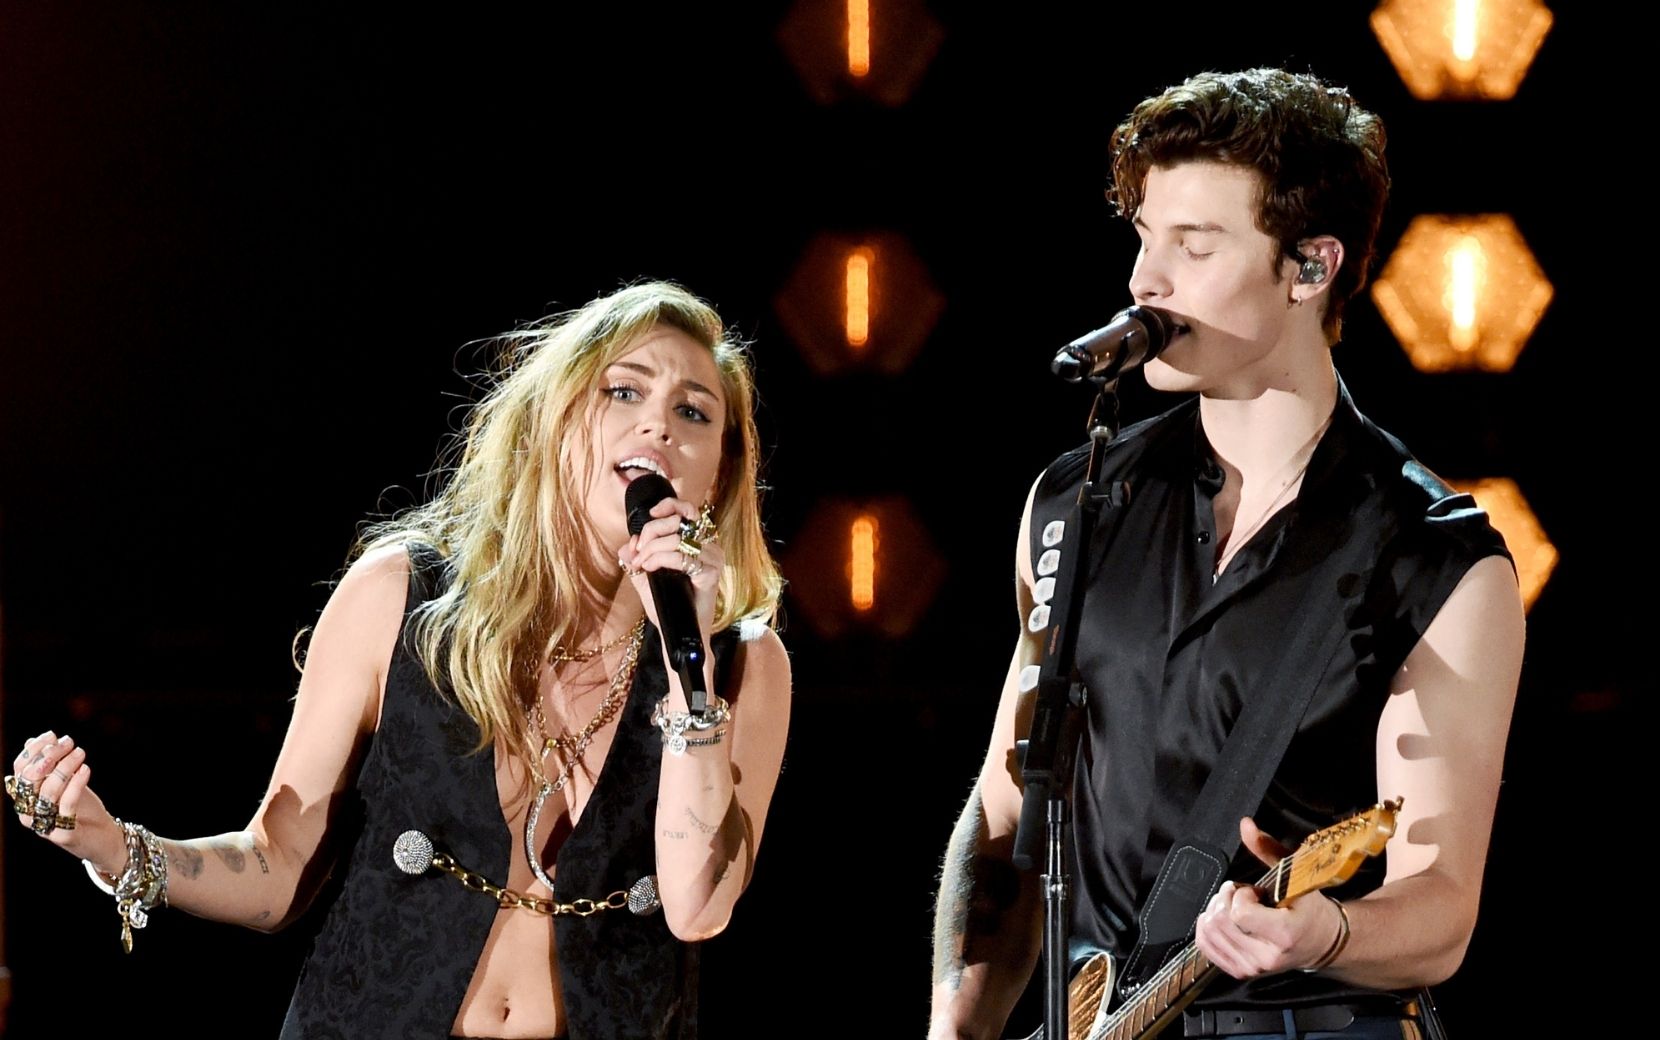 "Prisoner" quase foi parceria de Miley Cyrus e Shawn Mendes - vem entender essa história!